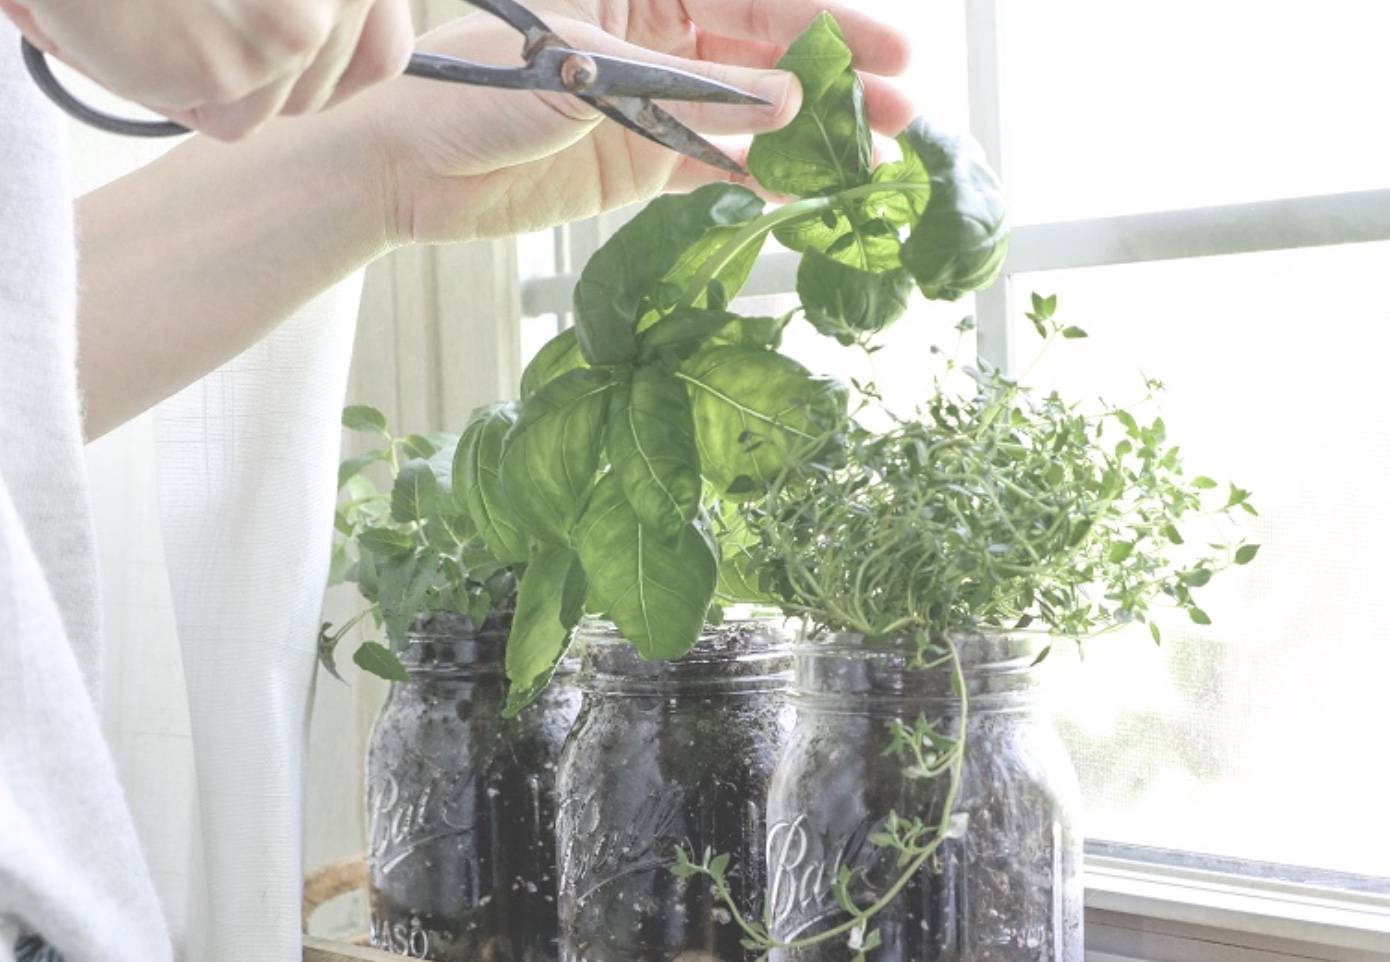 Planting Herbs Indoors